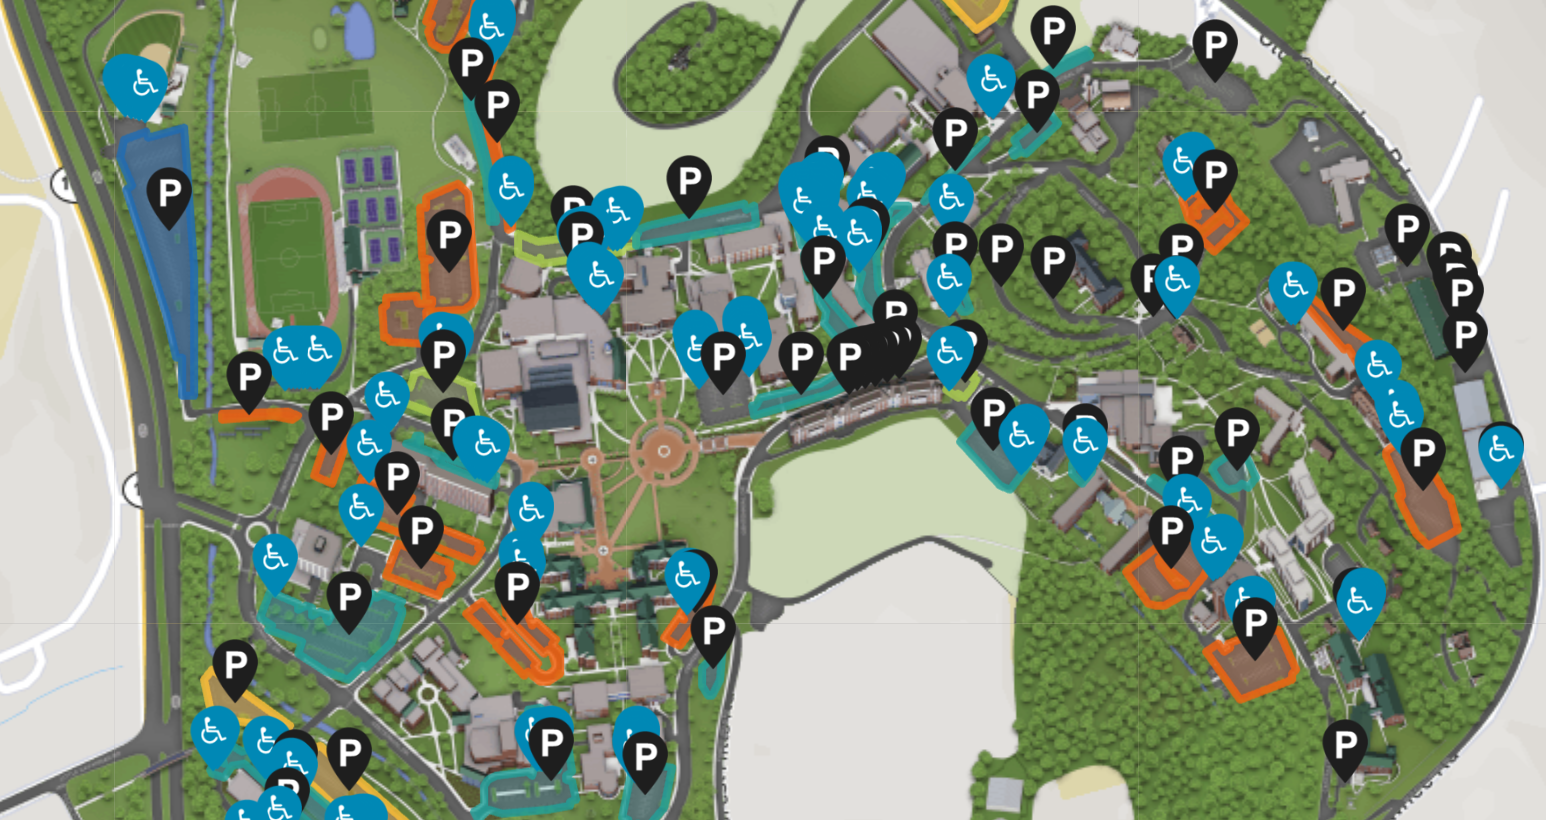 A screenshot of the full parking map